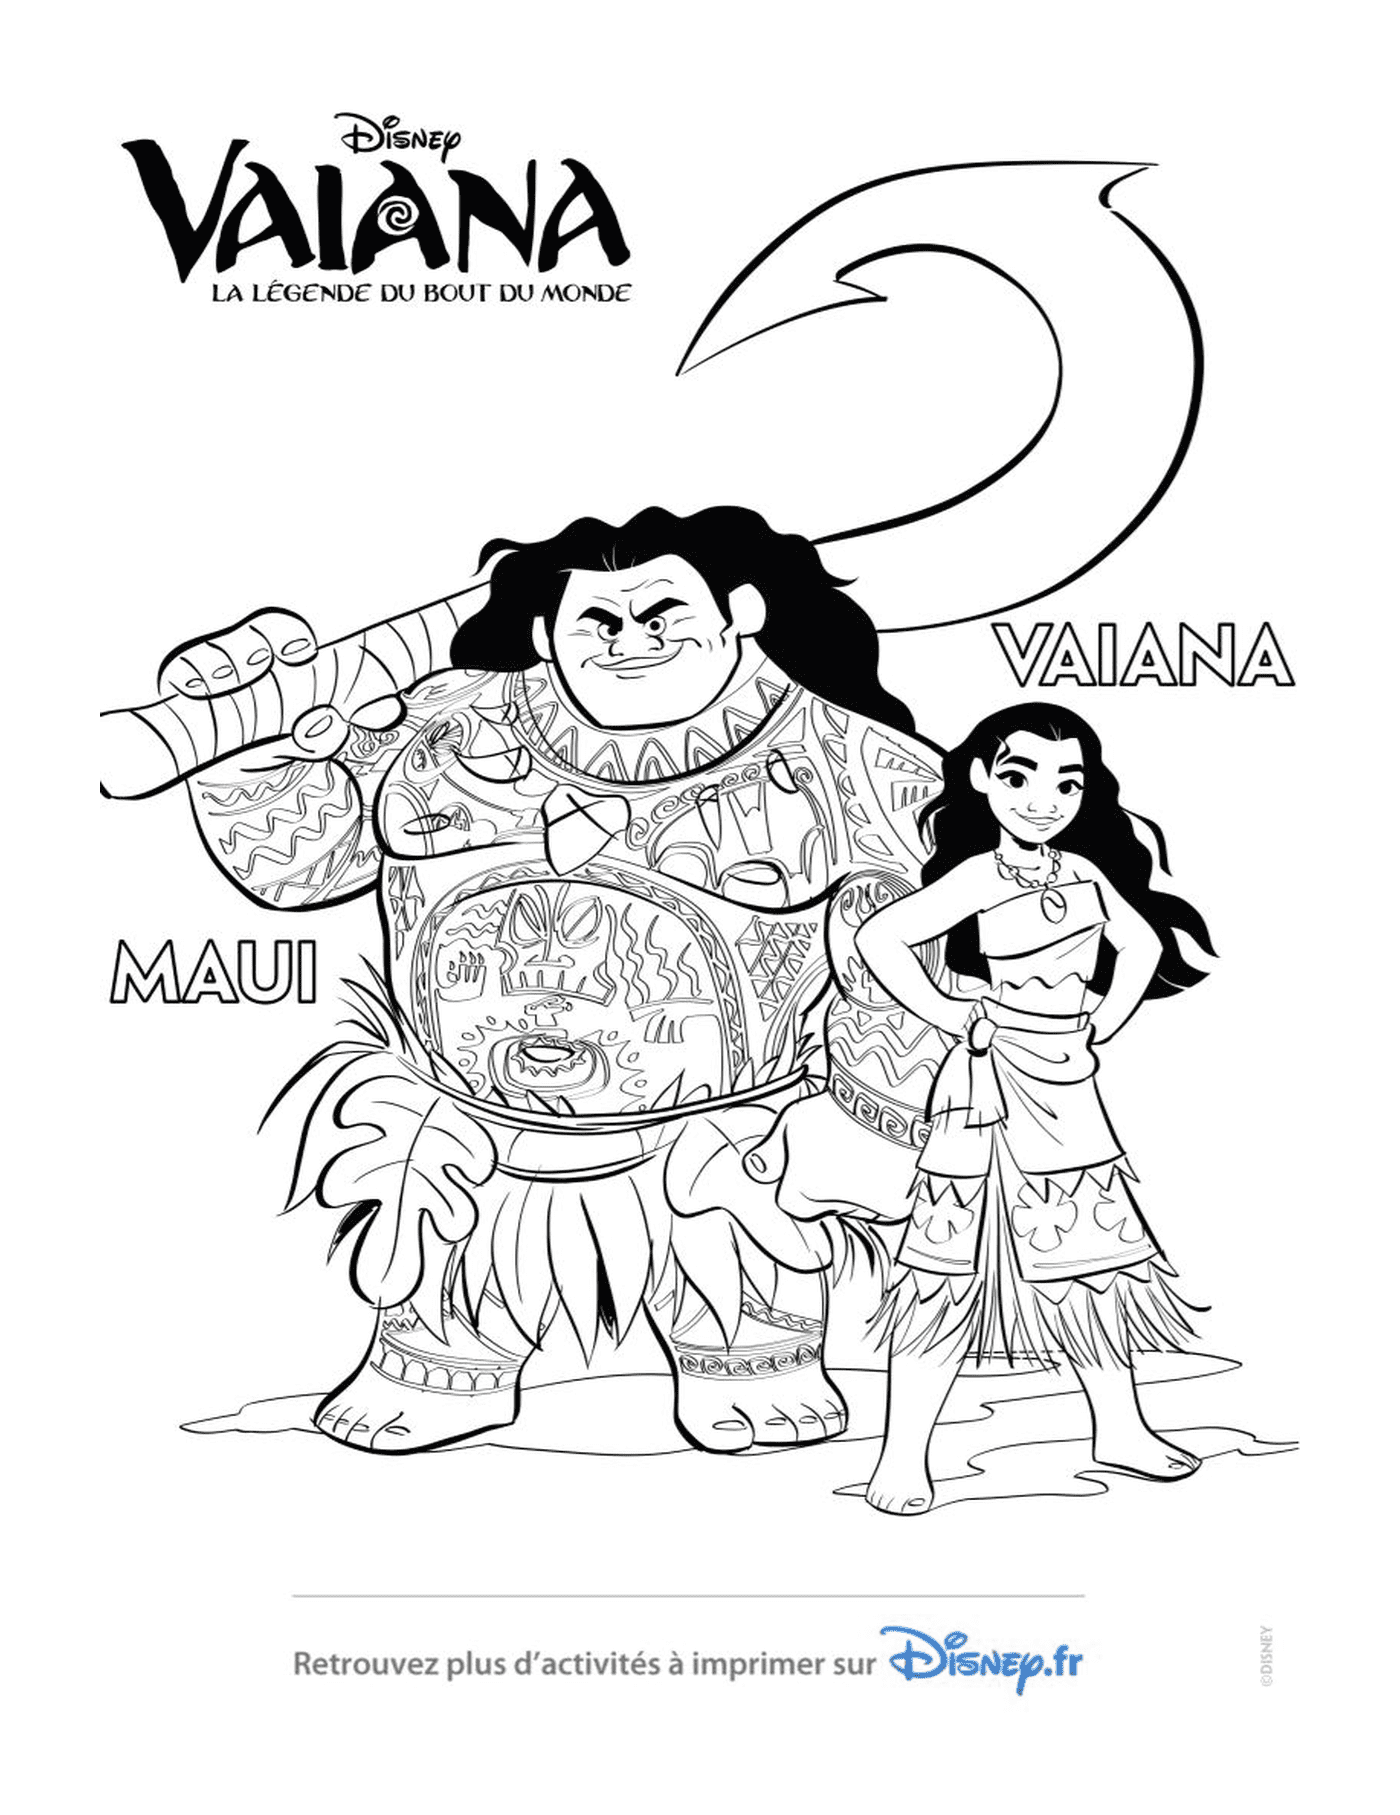  Моана и Мауи, неотъемлемый дуэт 